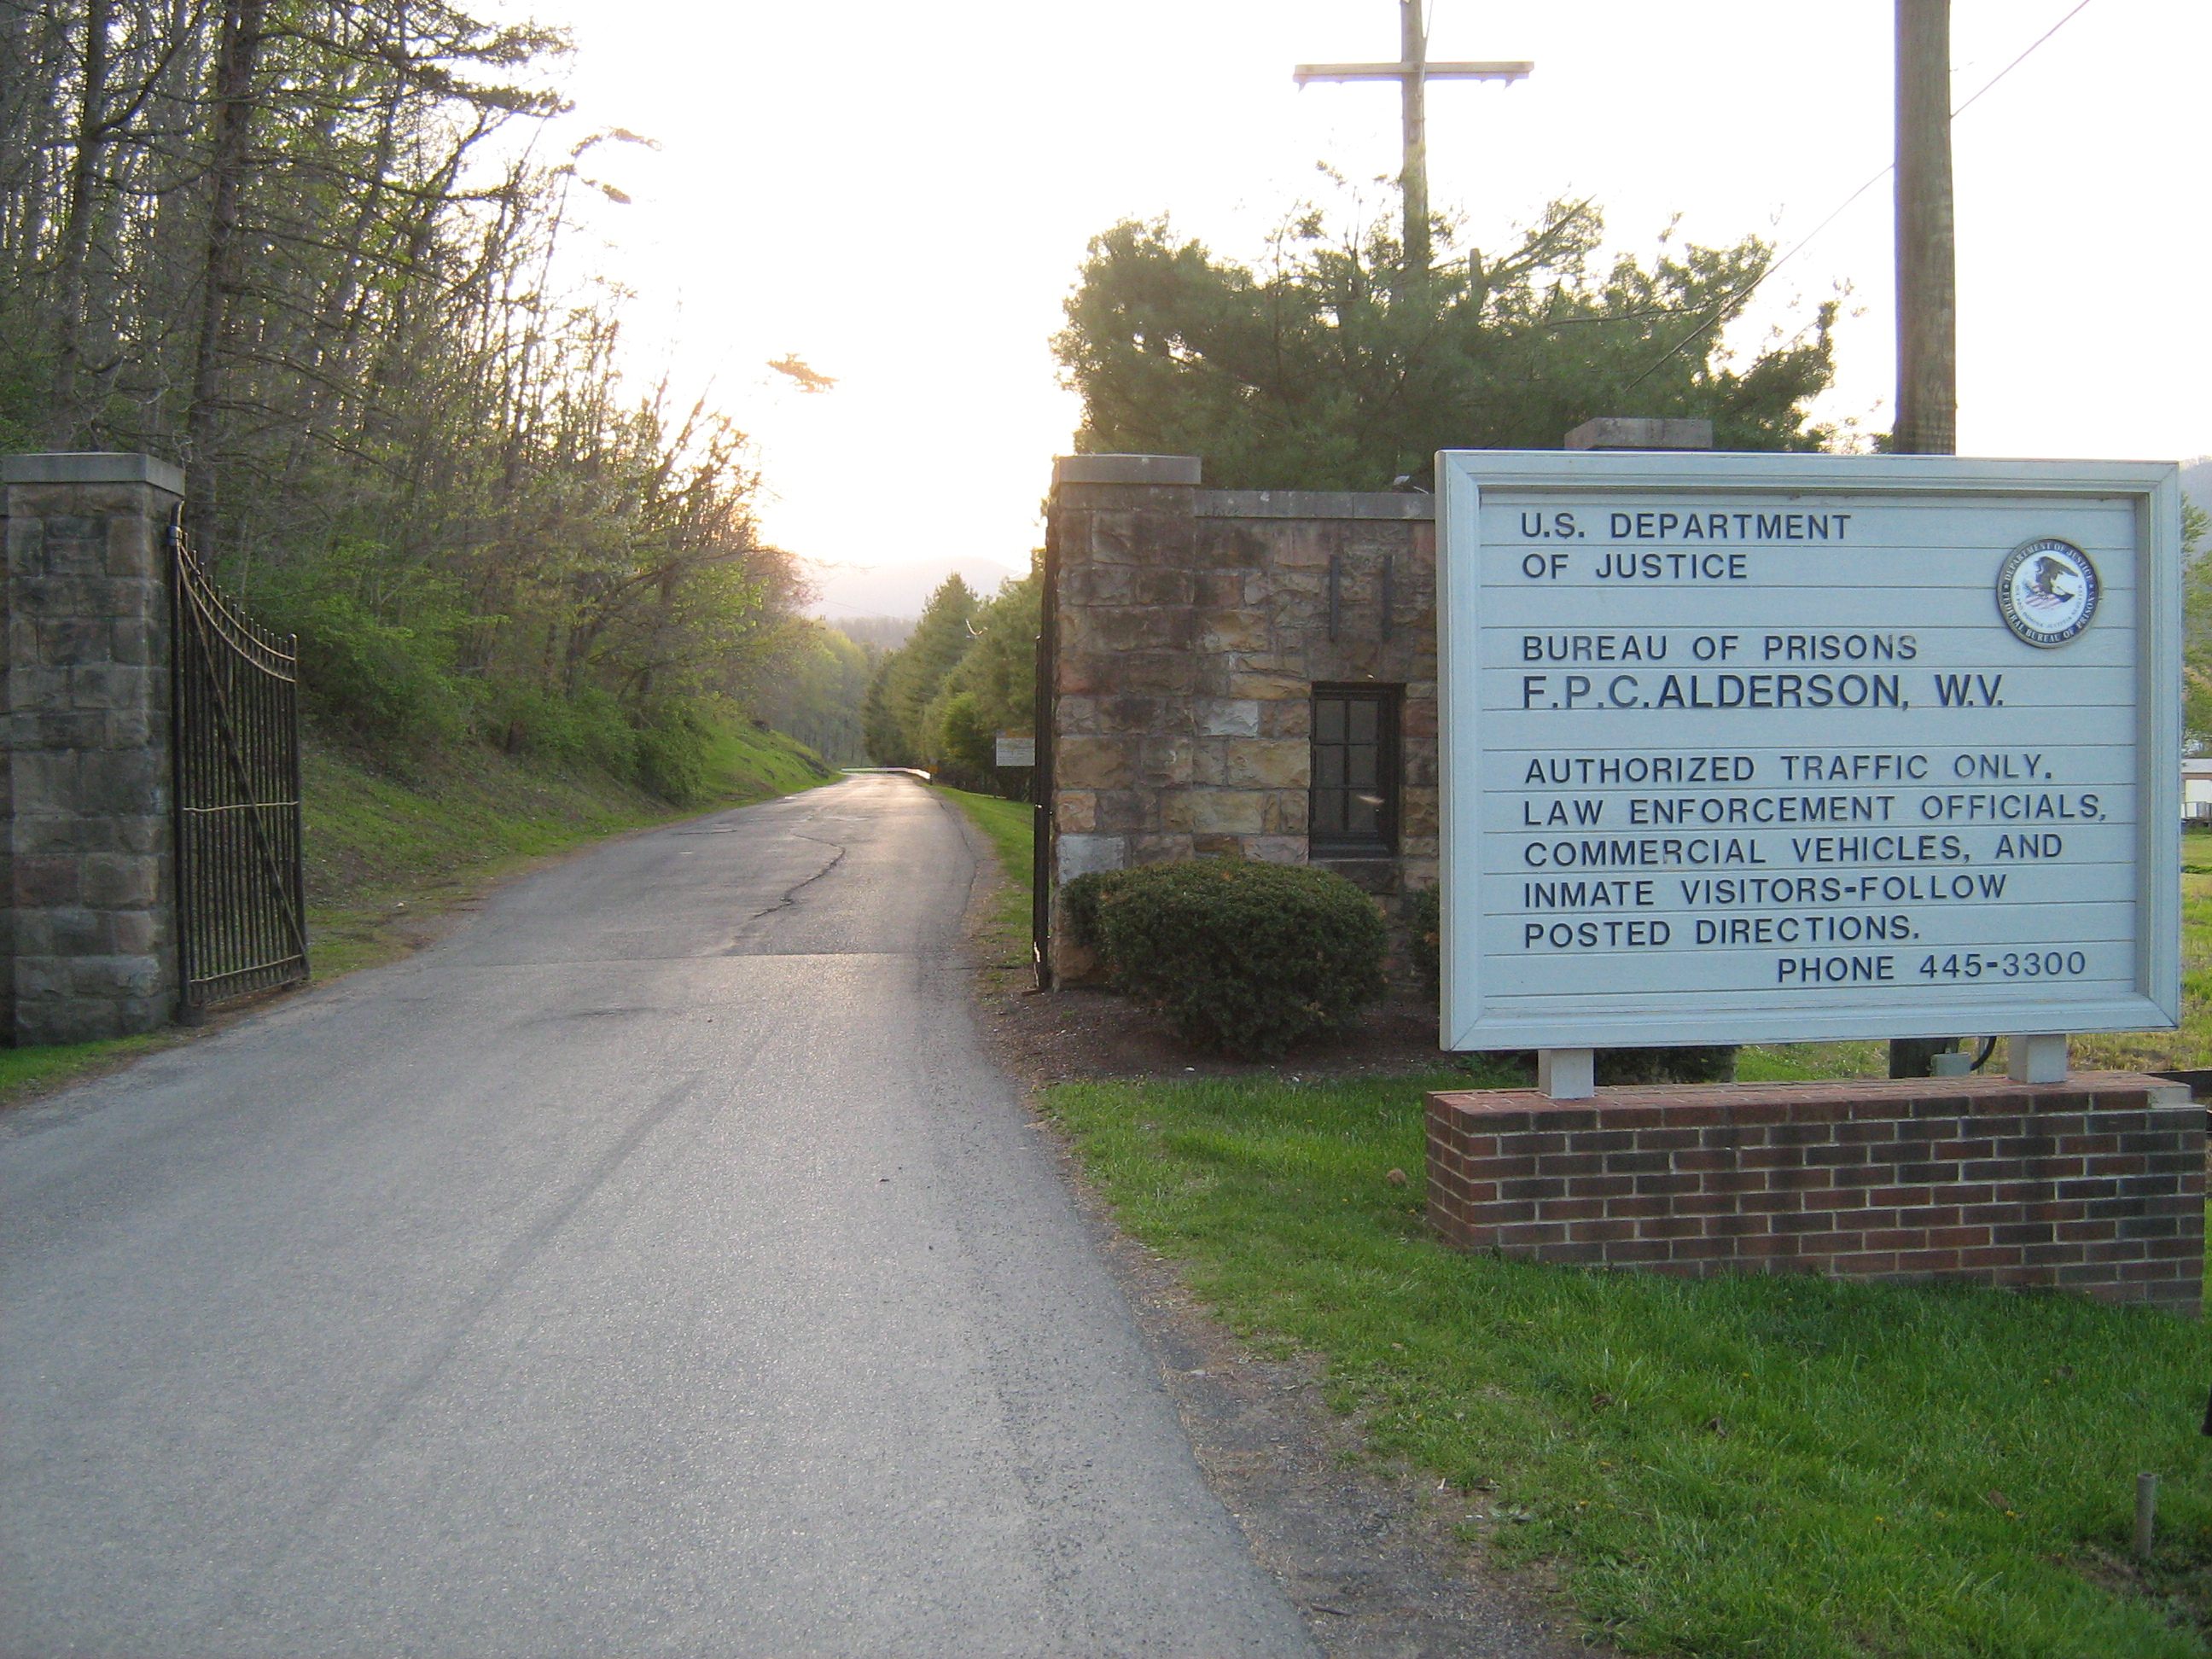 Entrance to Alderson's grounds